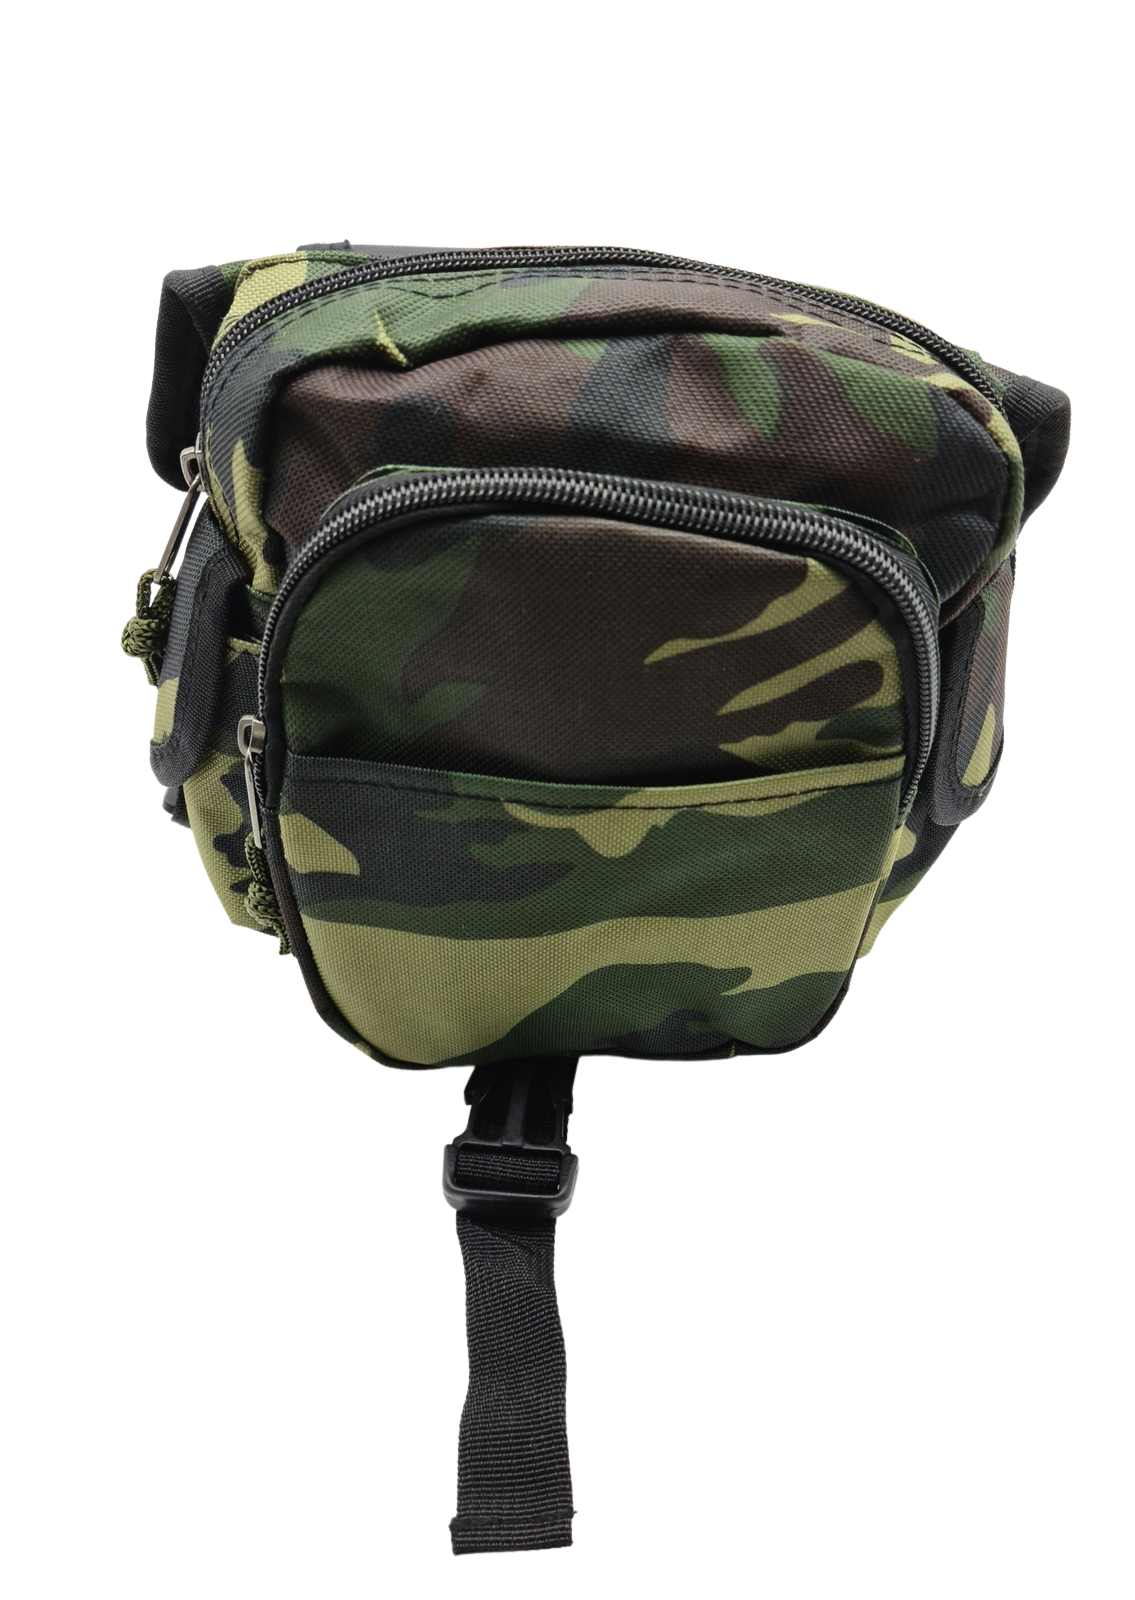 Military leg bag 701-5